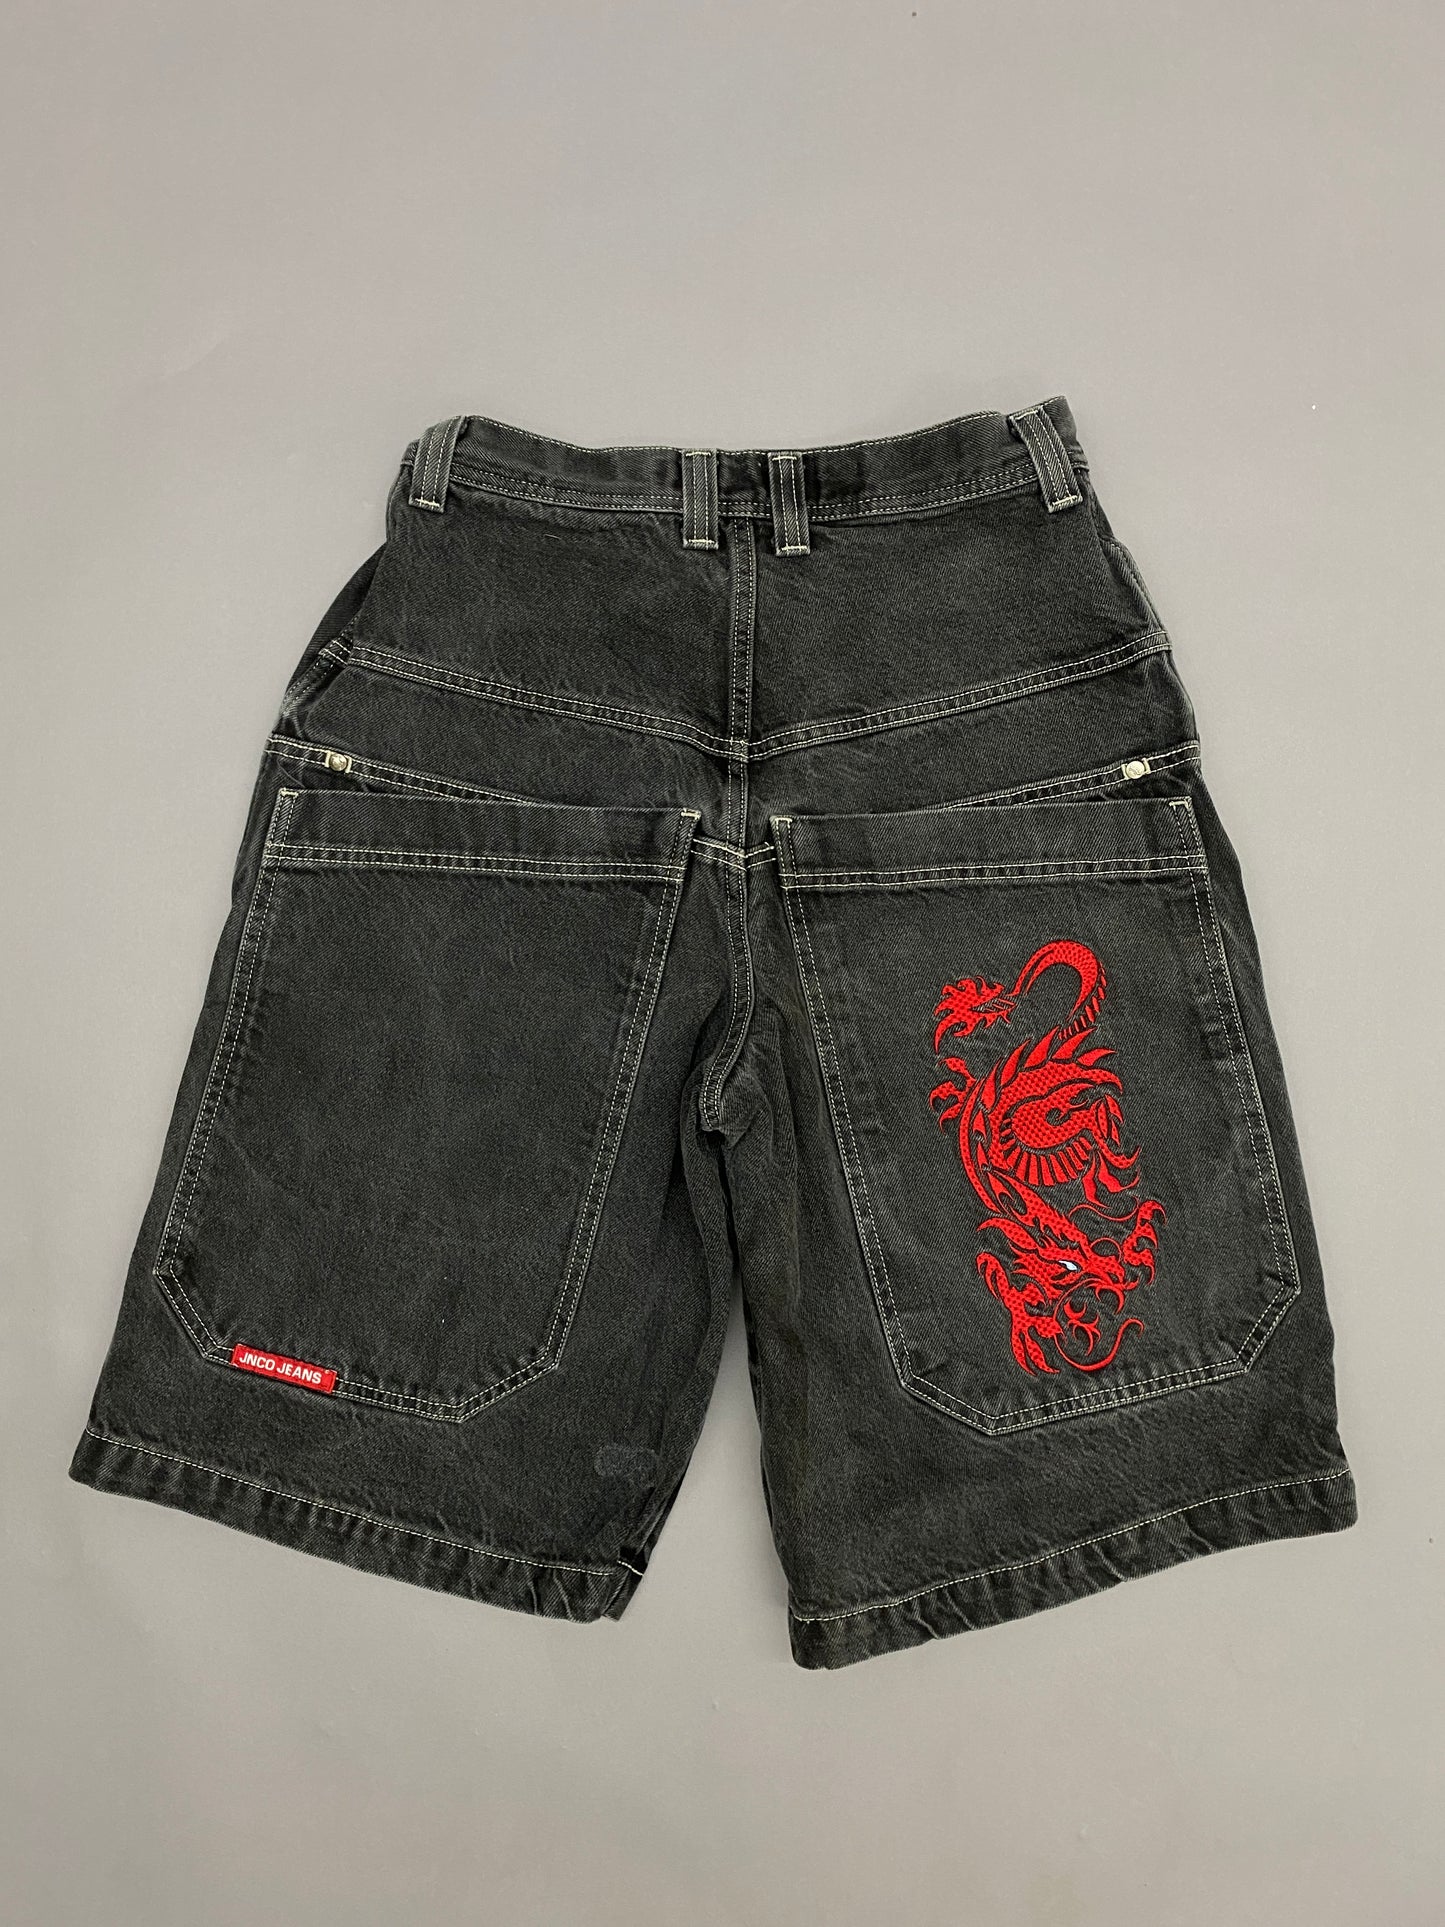 JNCO Dragon Vintage Shorts - 31